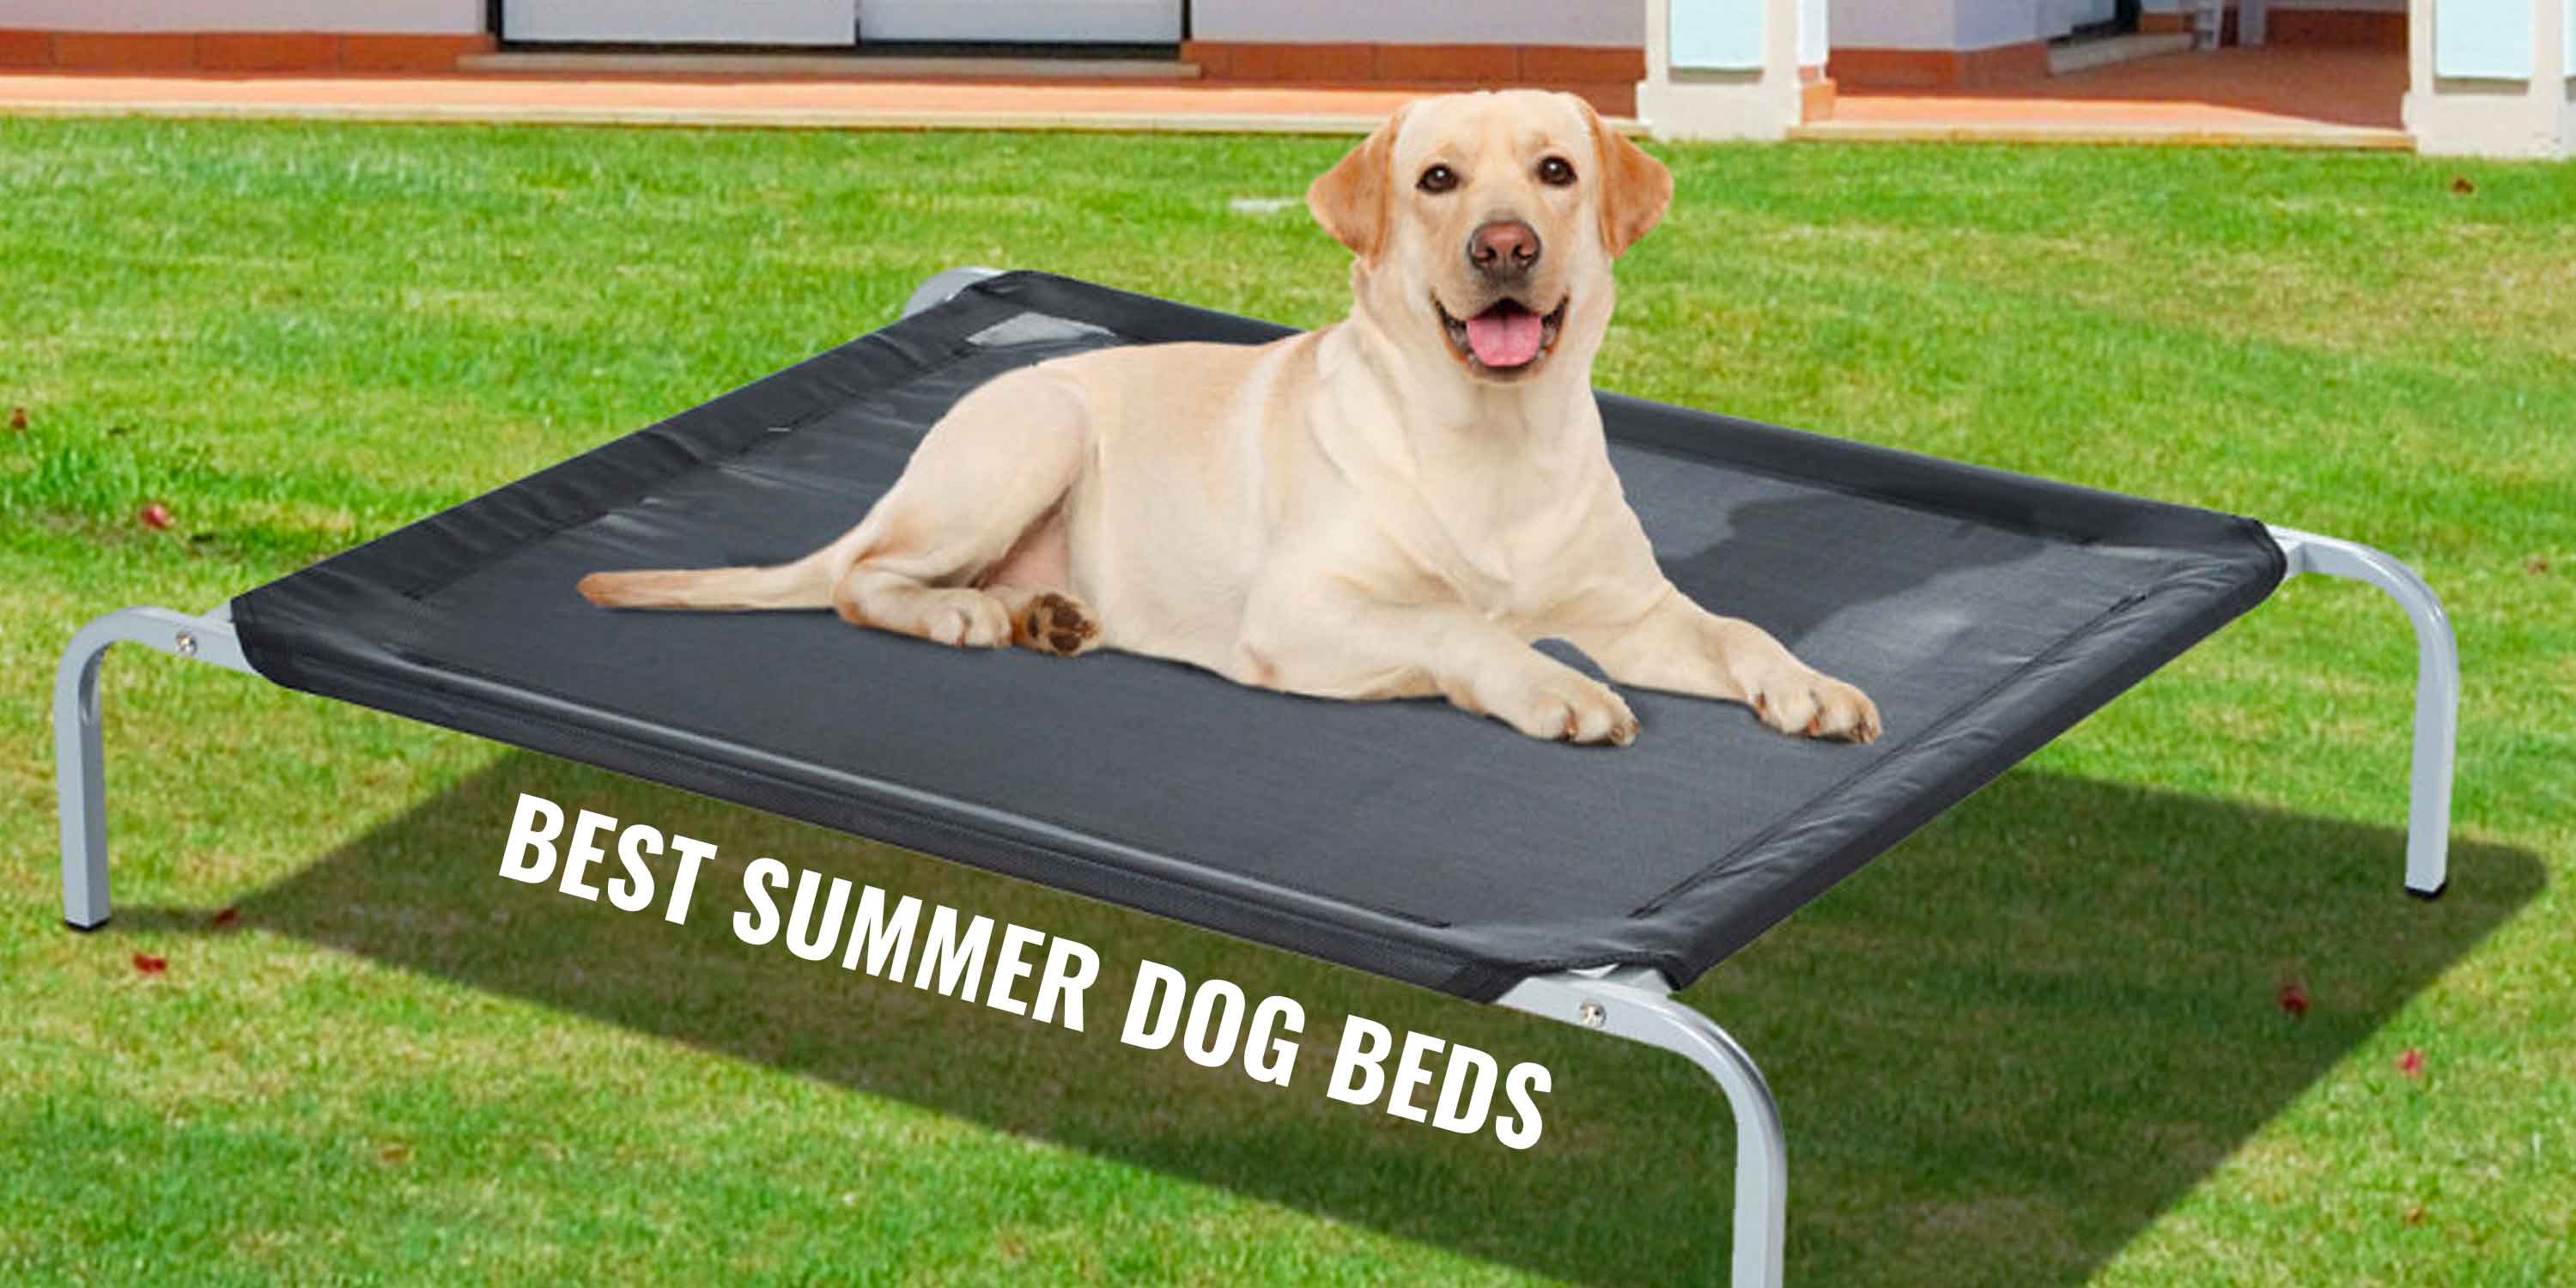 Summer Dog Beds – Cooling, Breathable 